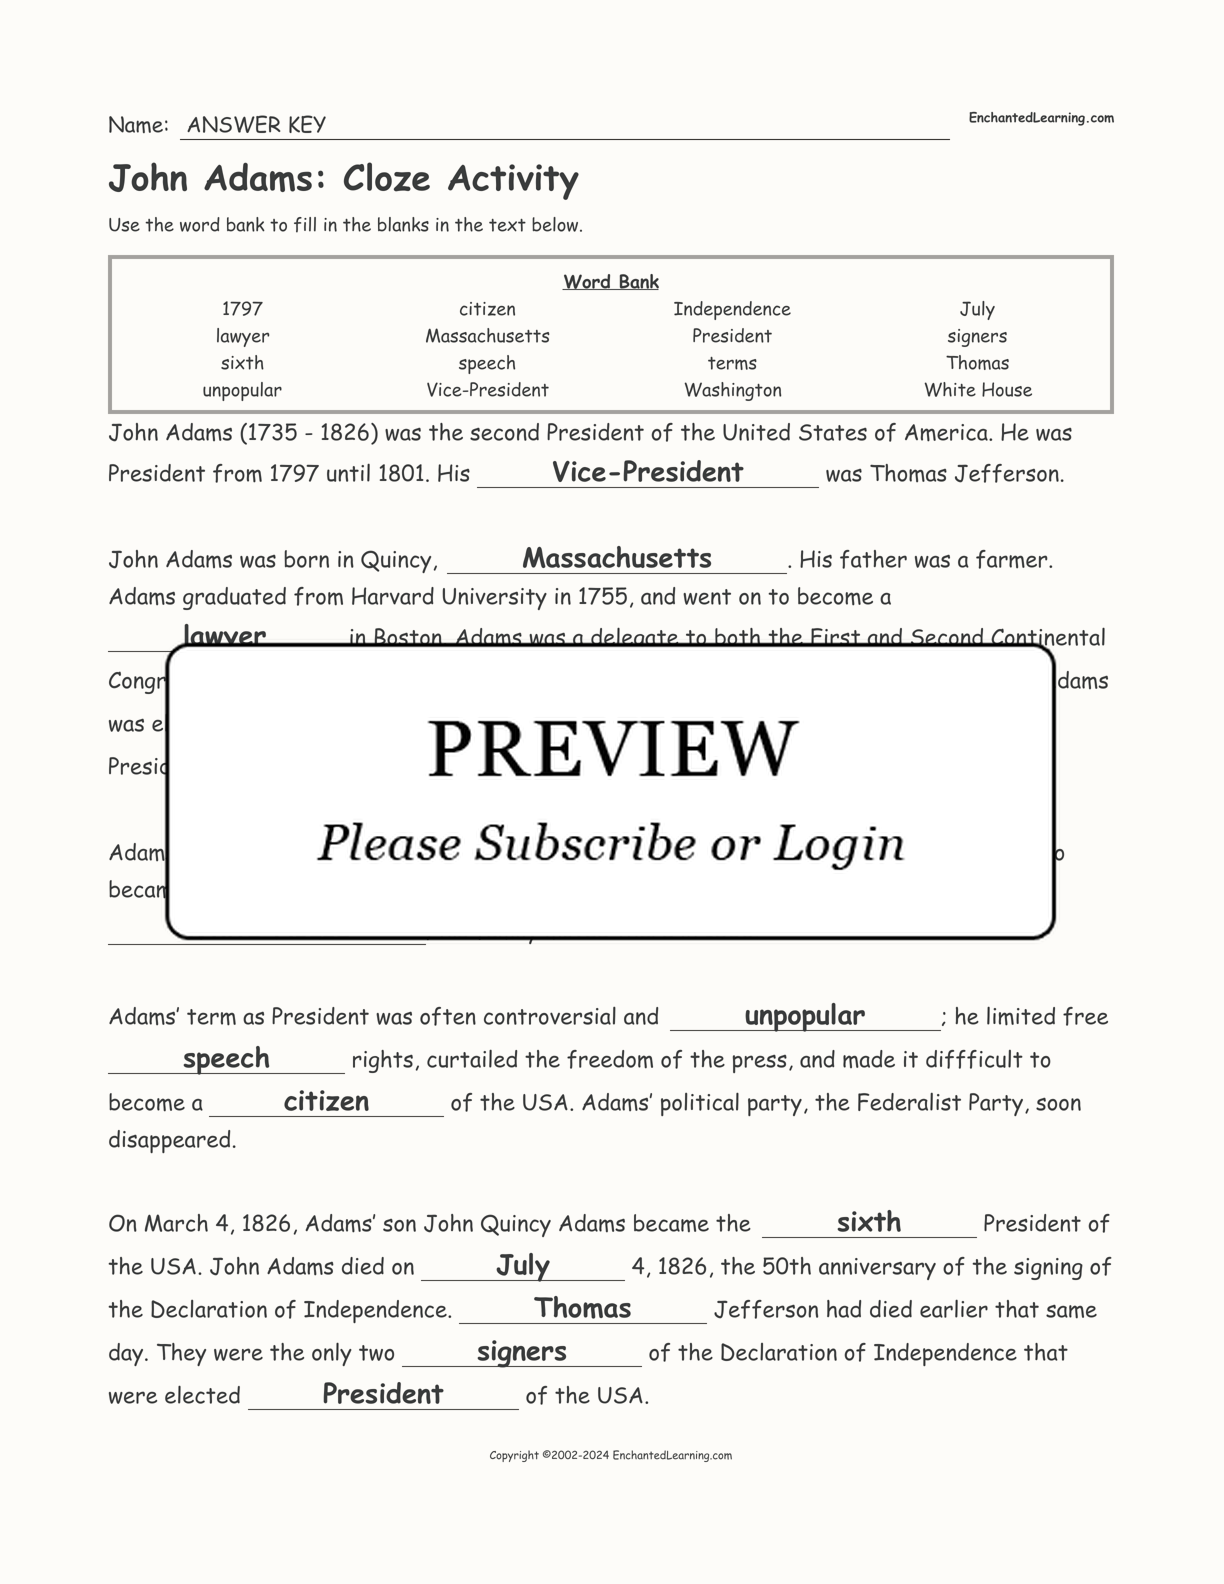 John Adams: Cloze Activity interactive worksheet page 2